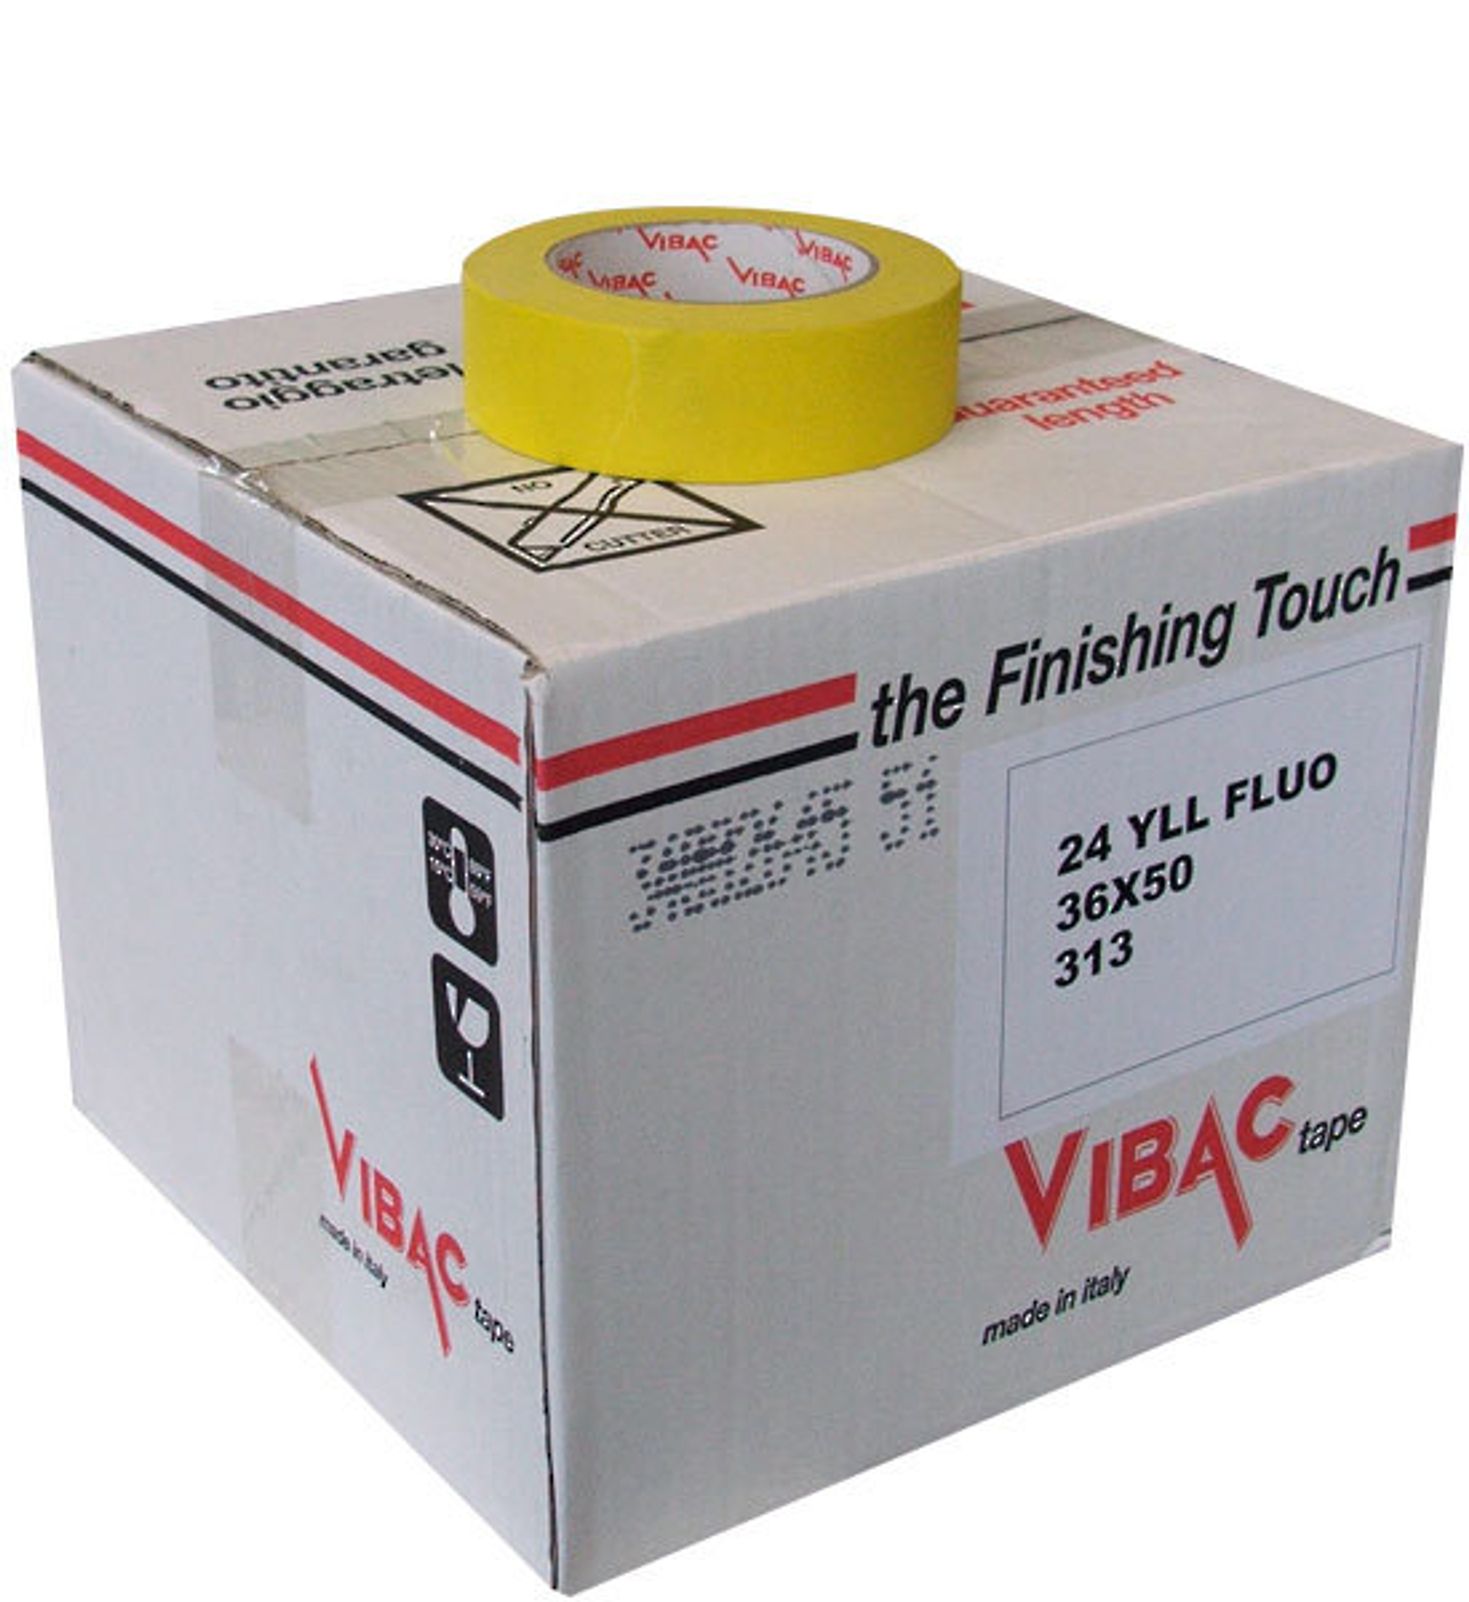 Vibac VIB-313-0008 0.75 in. Yellow Mask Tape CS - 48